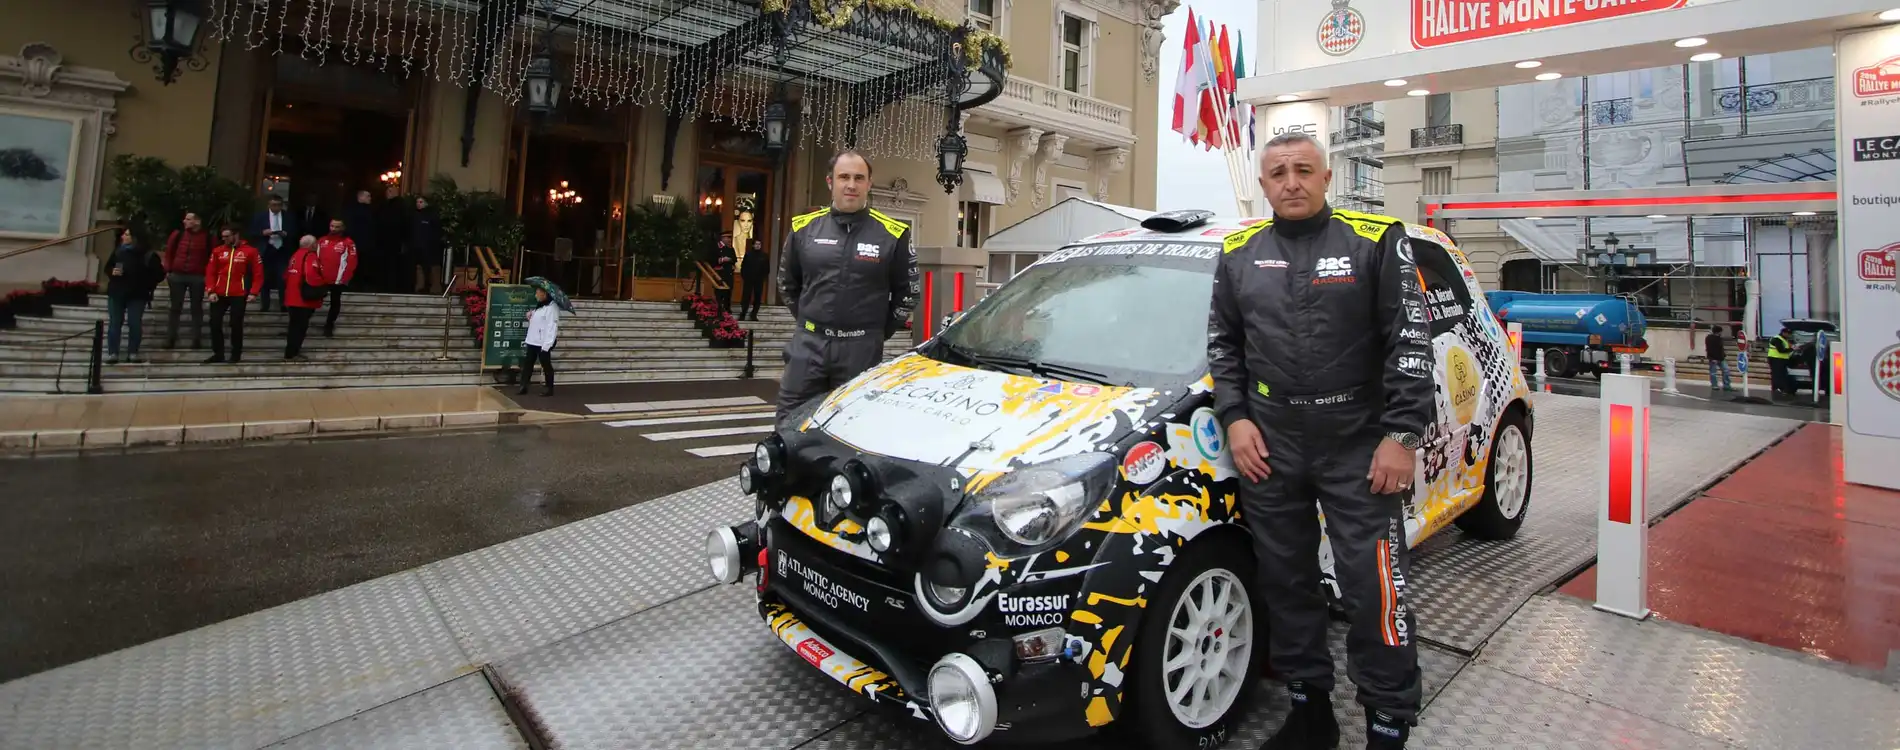 Le Rallye Monte-Carlo